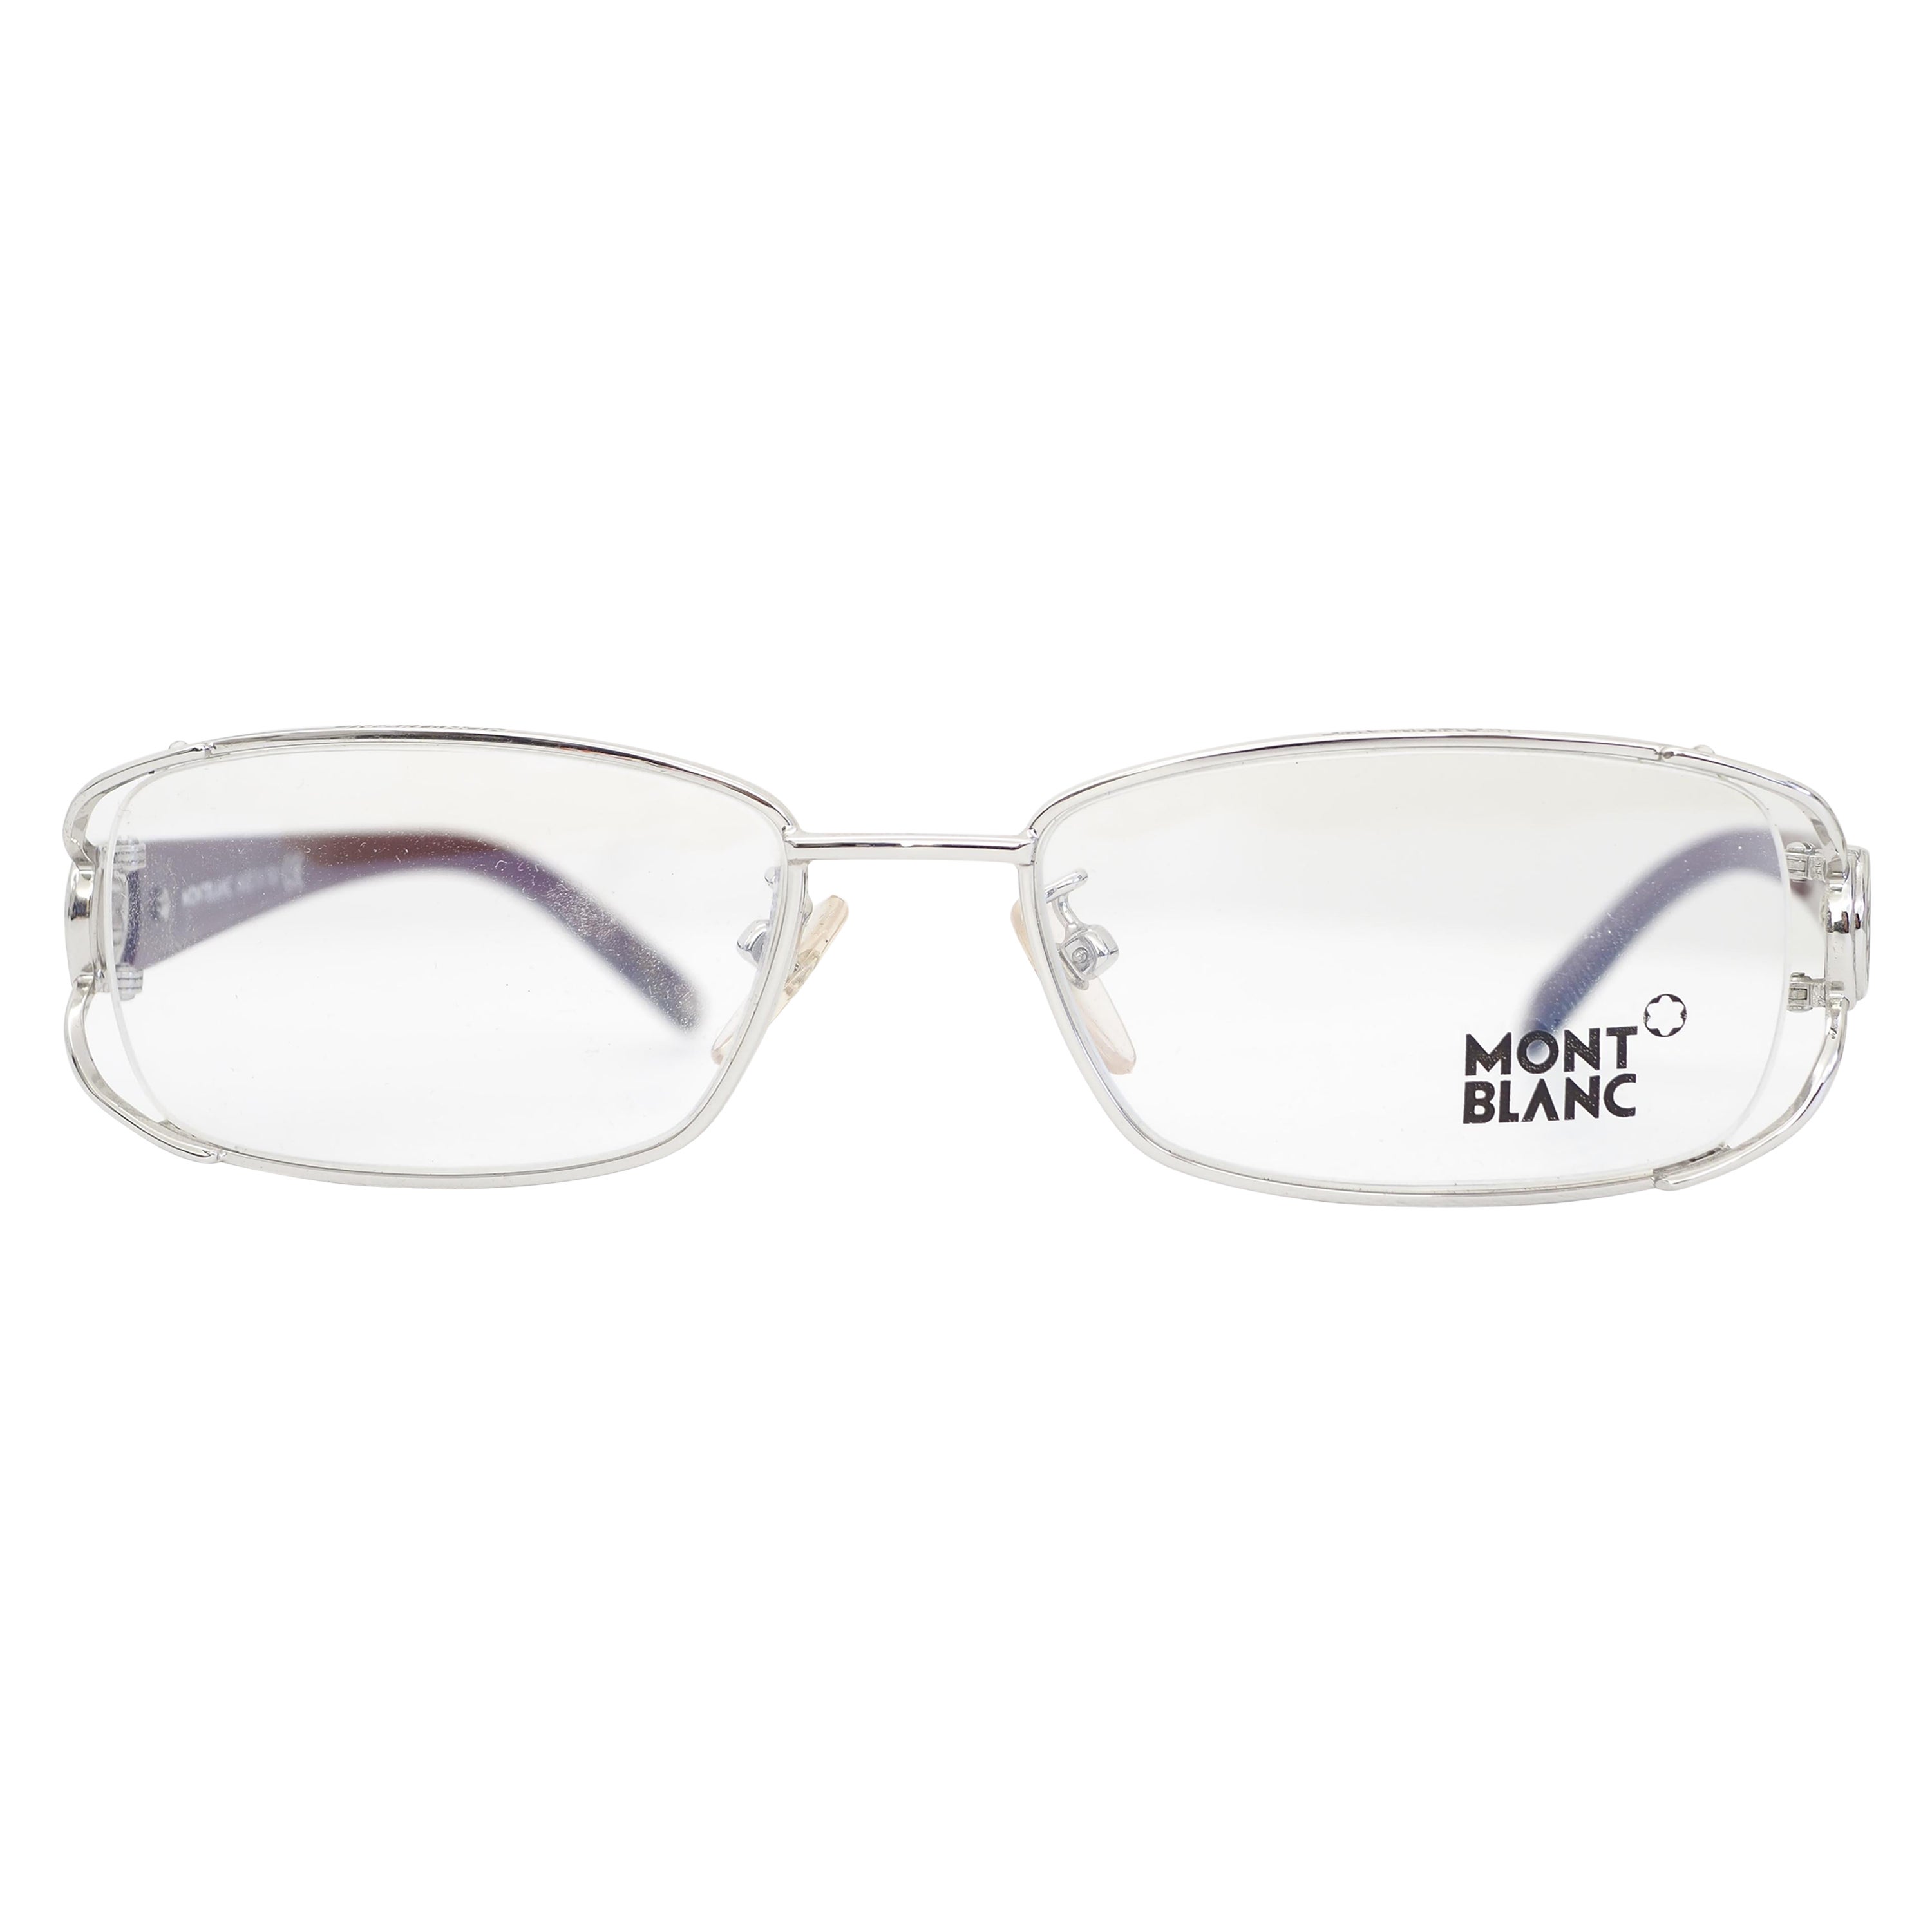 Mont Blanc frame glasses For Sale